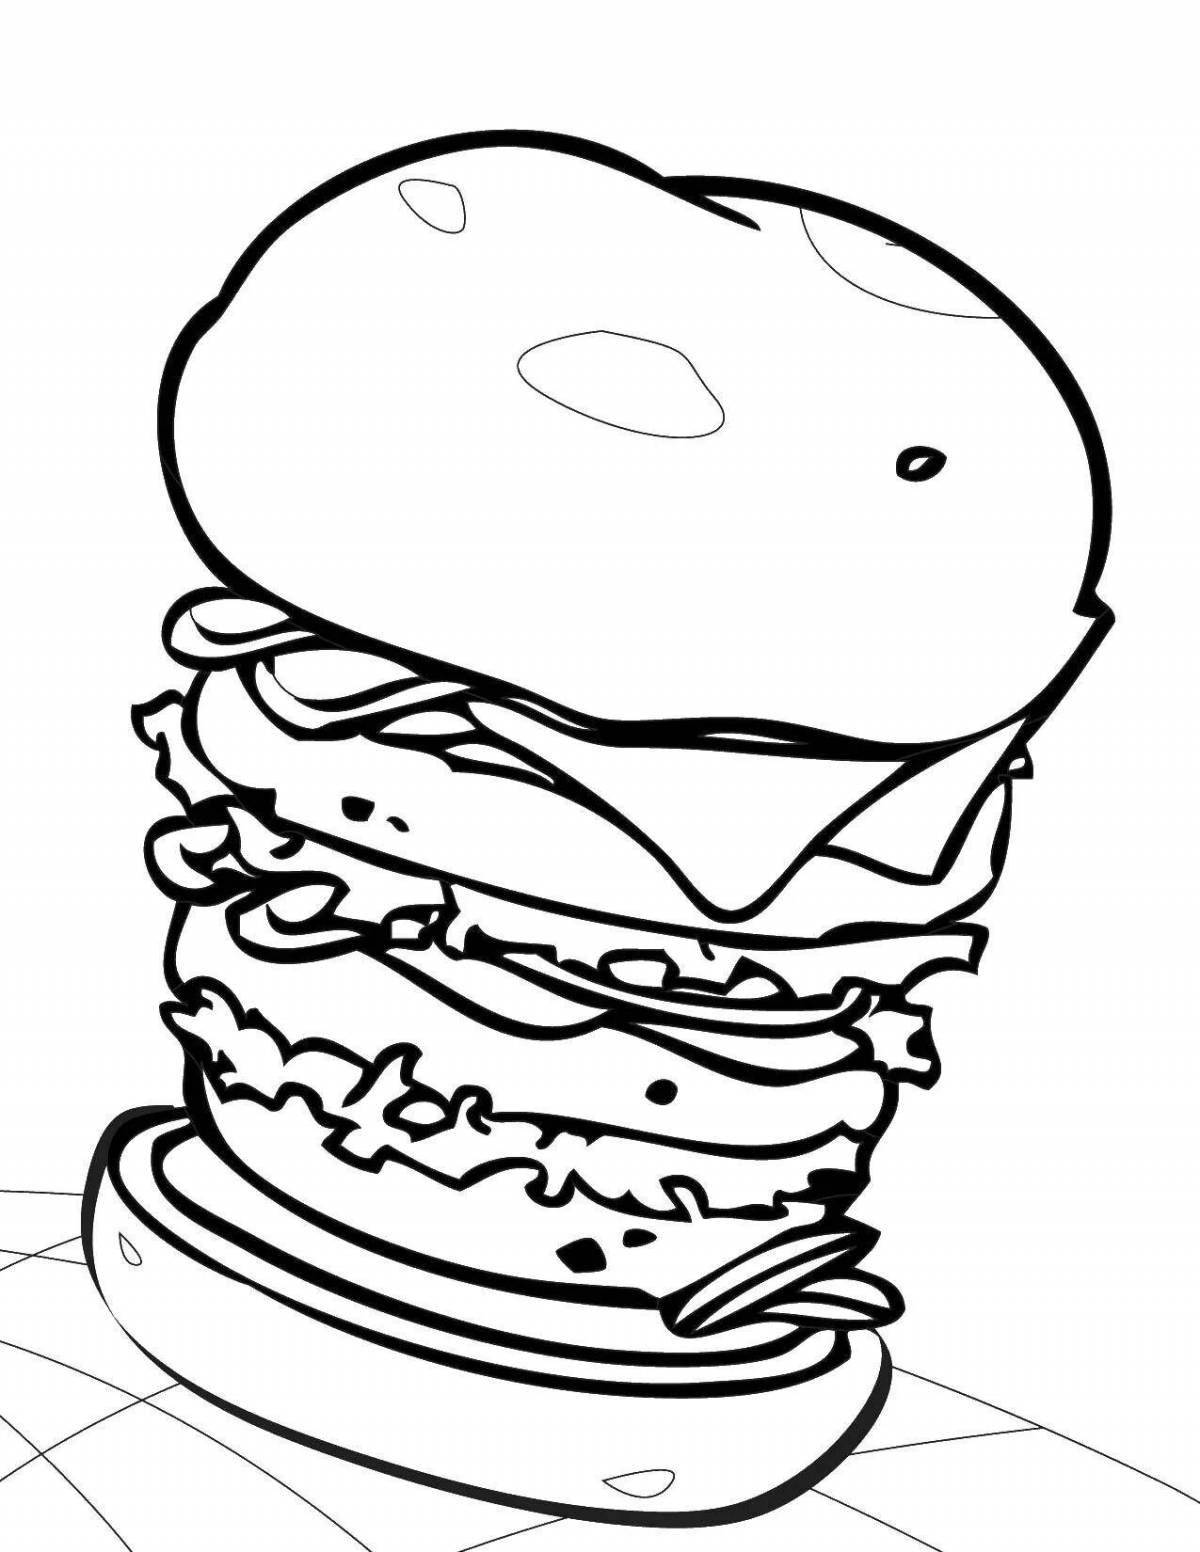 Delicious hamburger coloring page